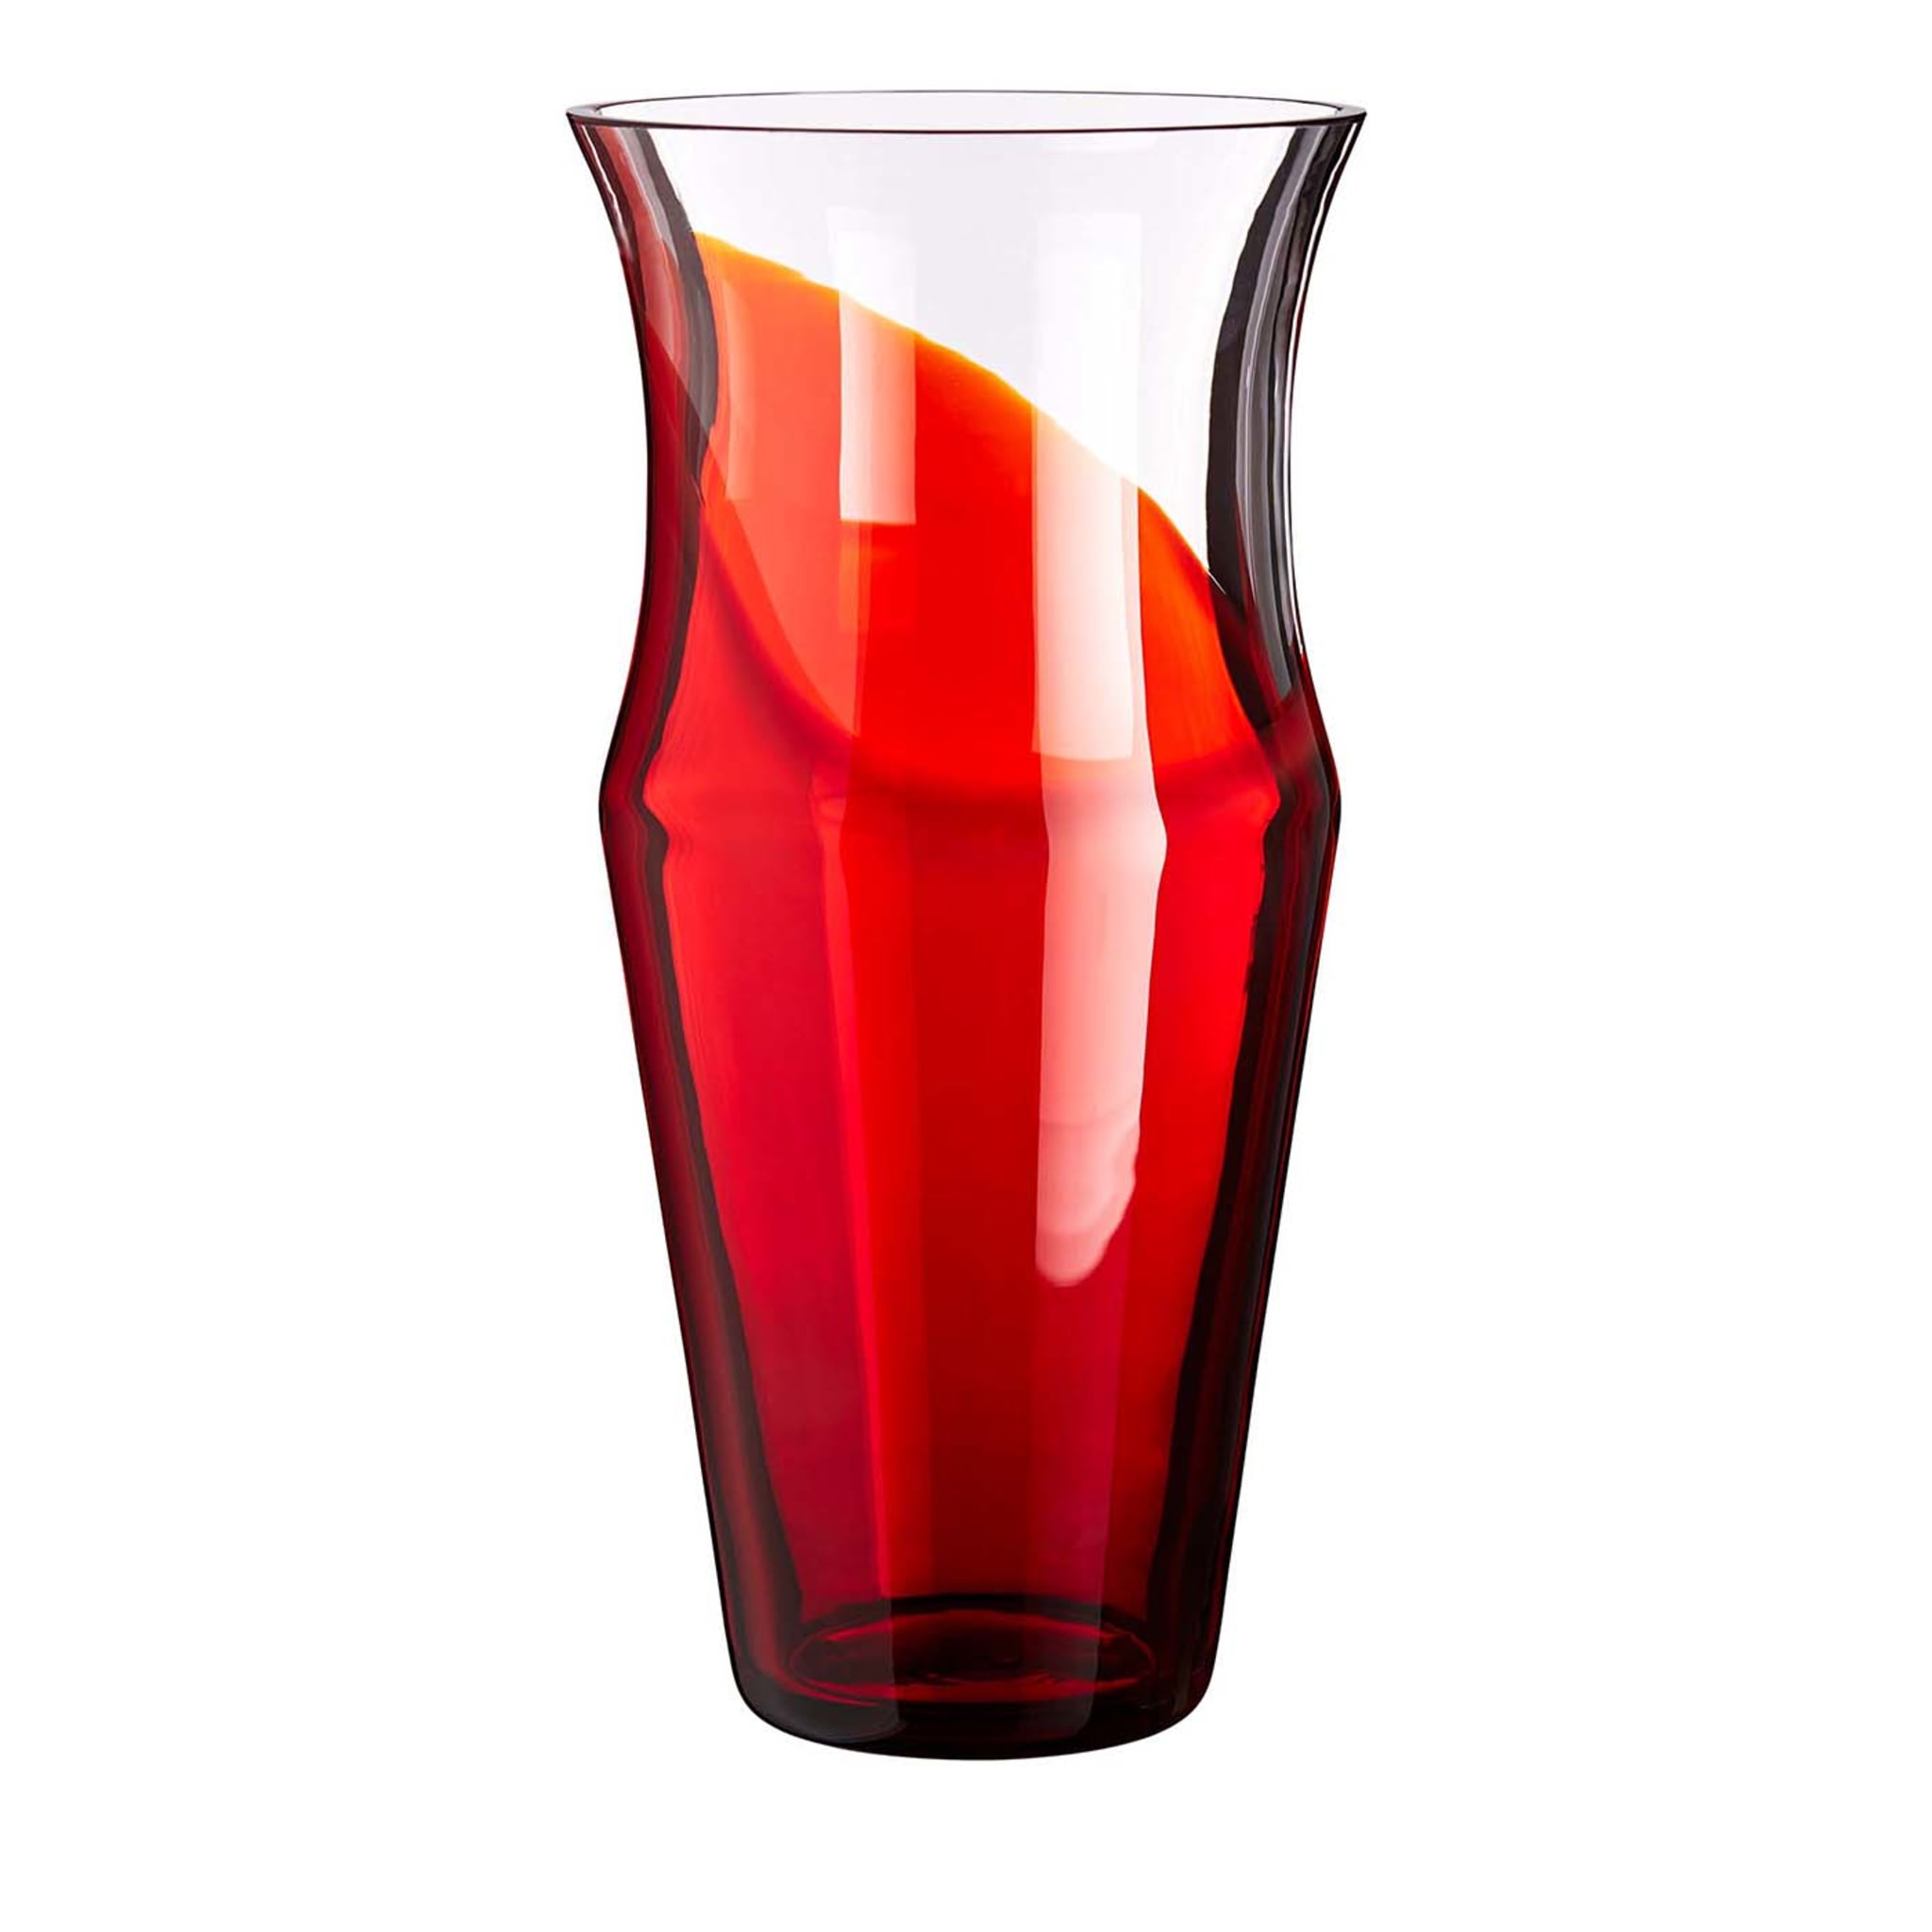 Vase Monocromo rouge et transparent de Carlo Moretti - Vue principale